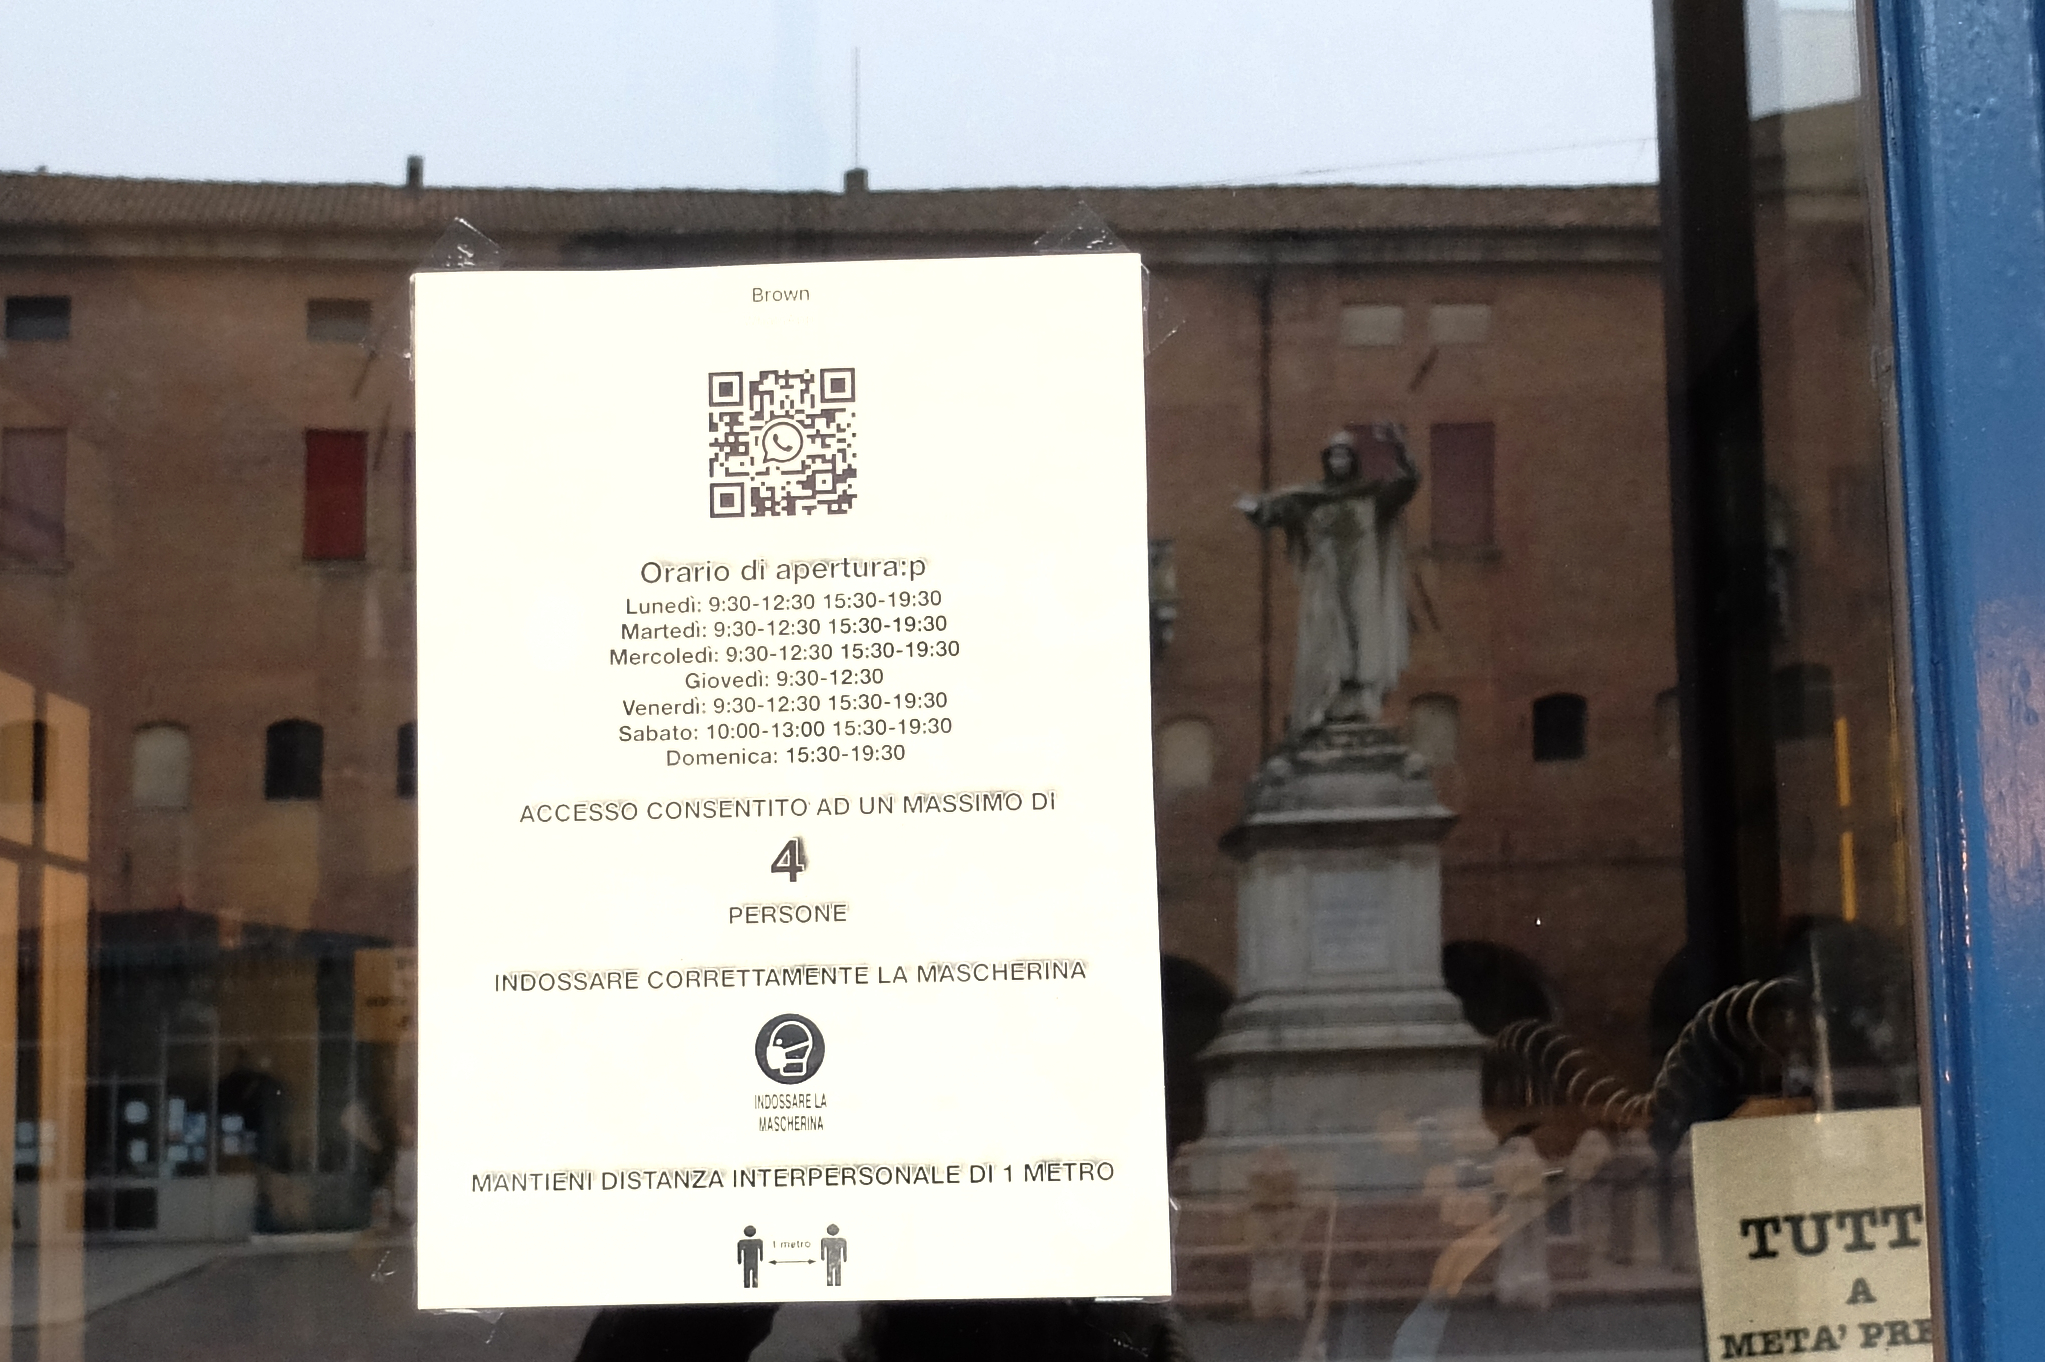 Savonarola launches invective against restrictions...